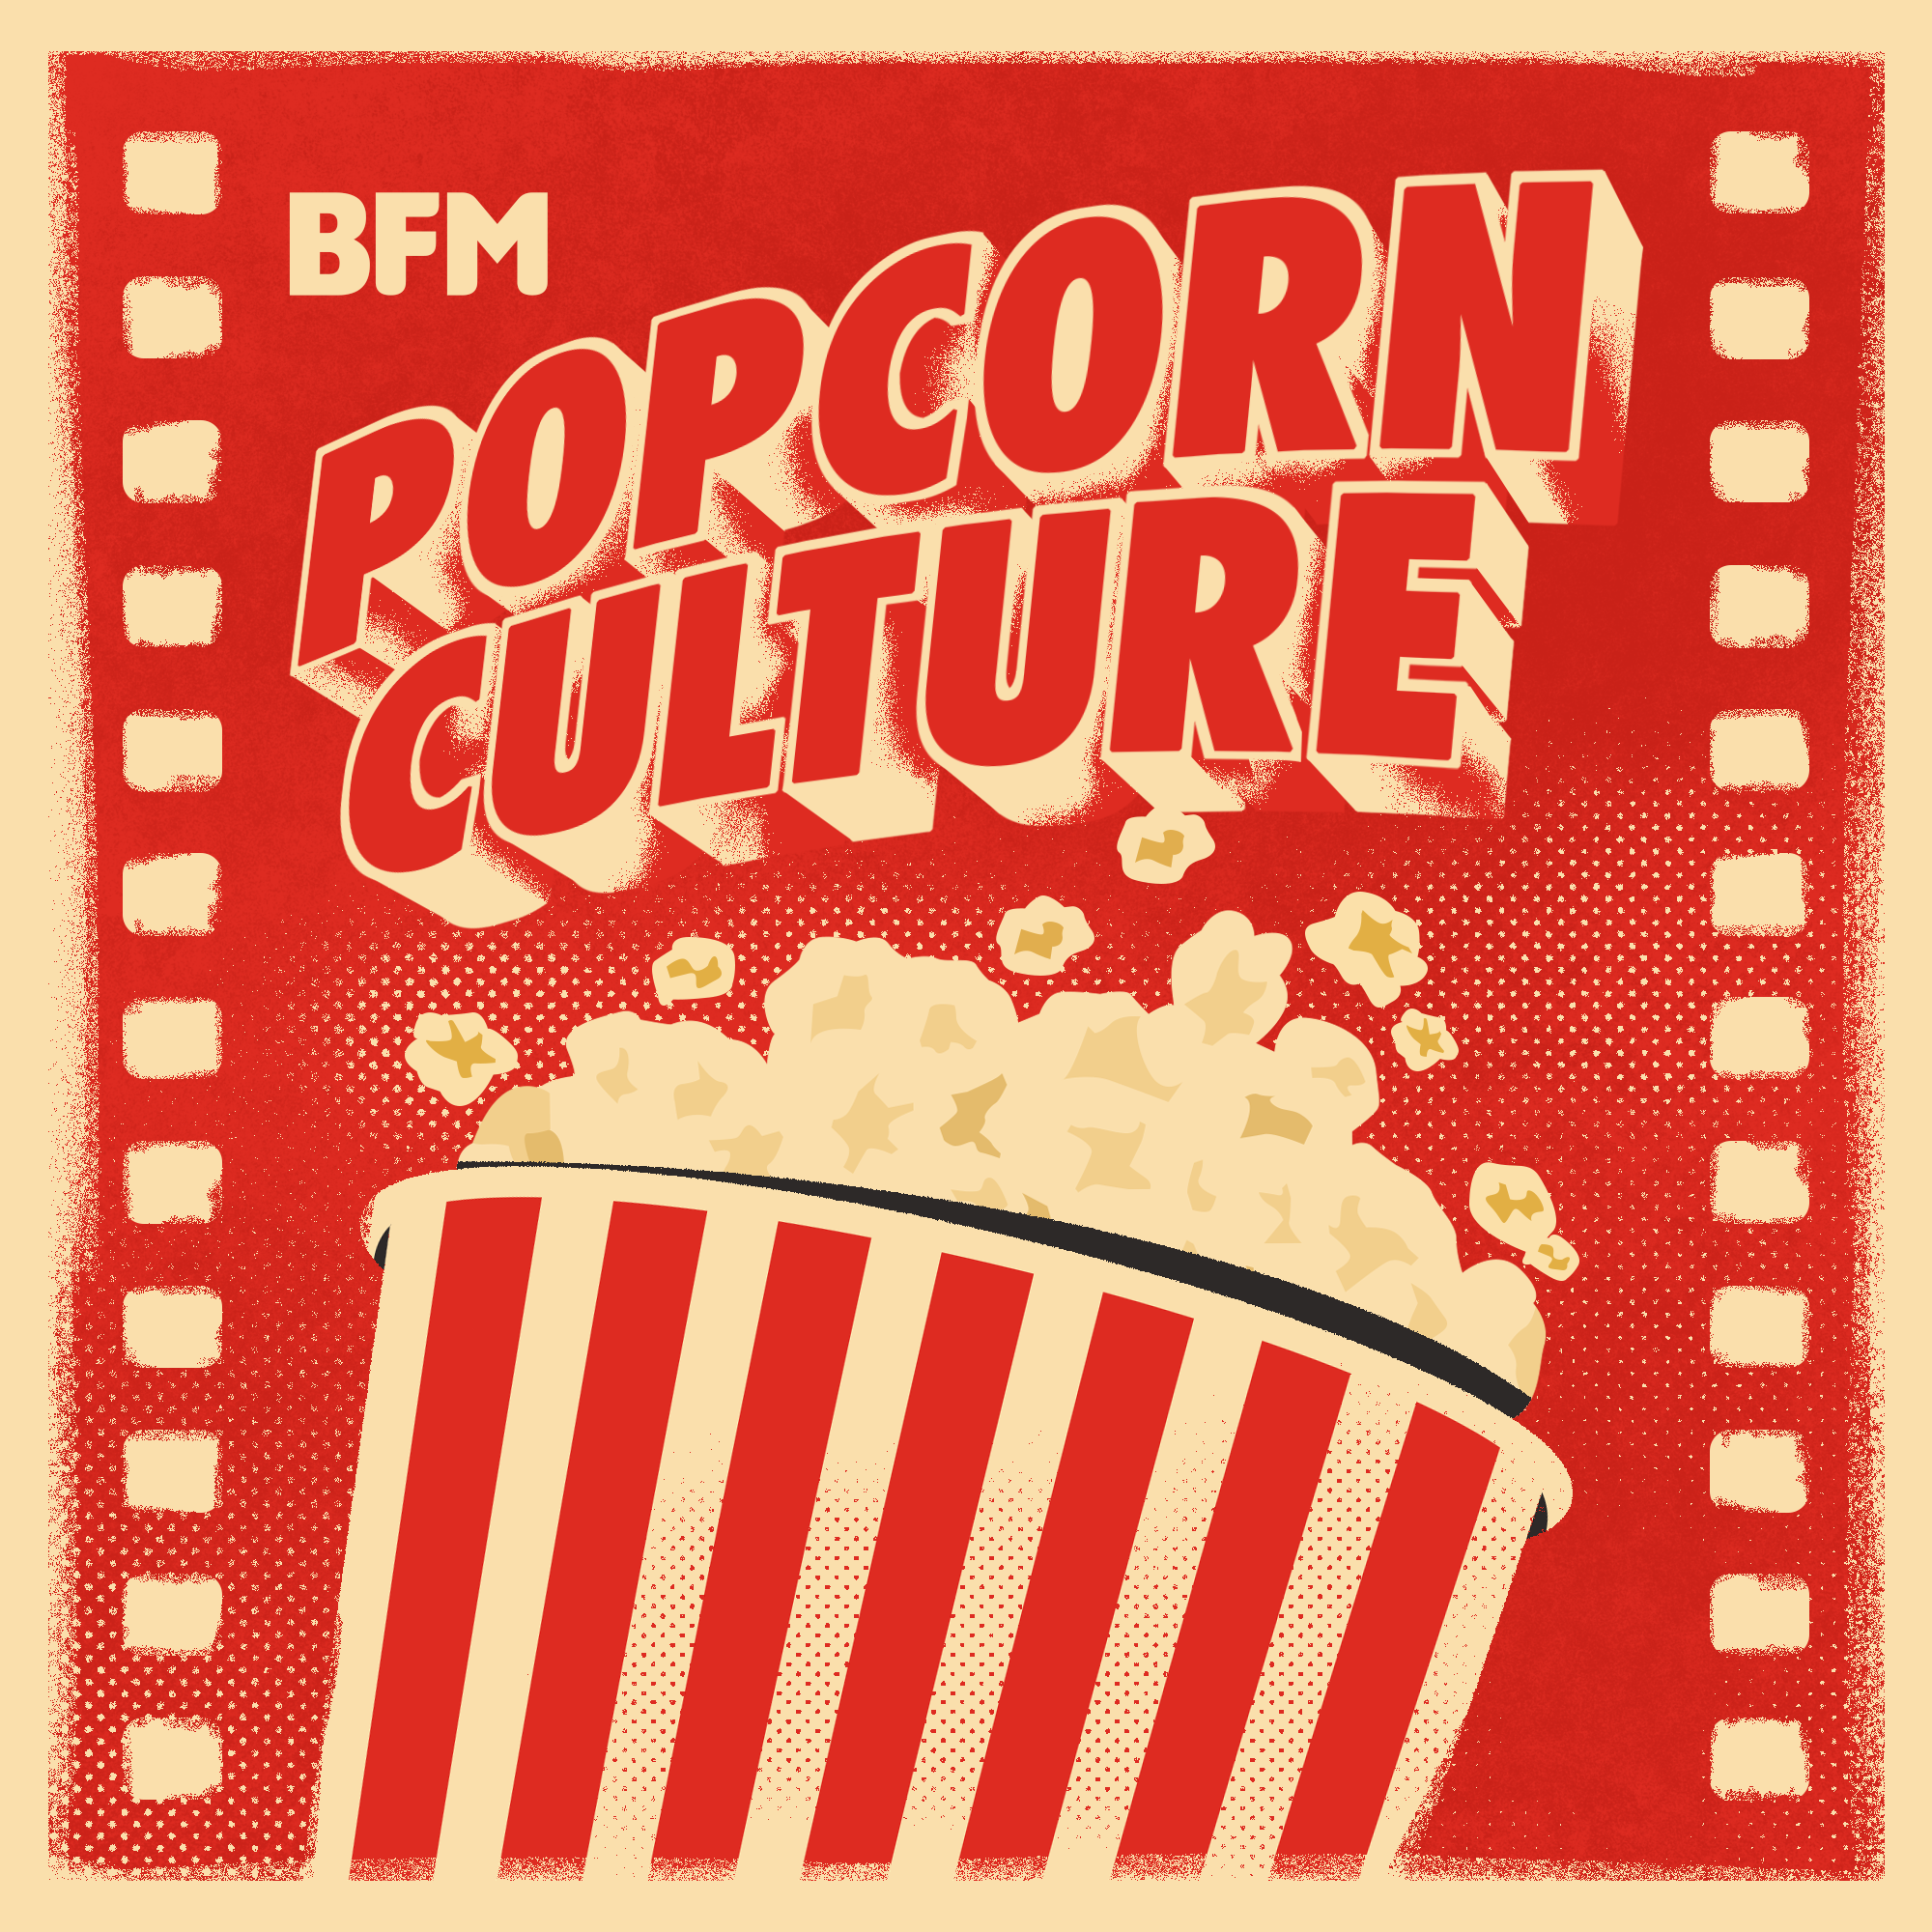 Popcorn Culture - Stuff We Missed: Evil Dead Rise